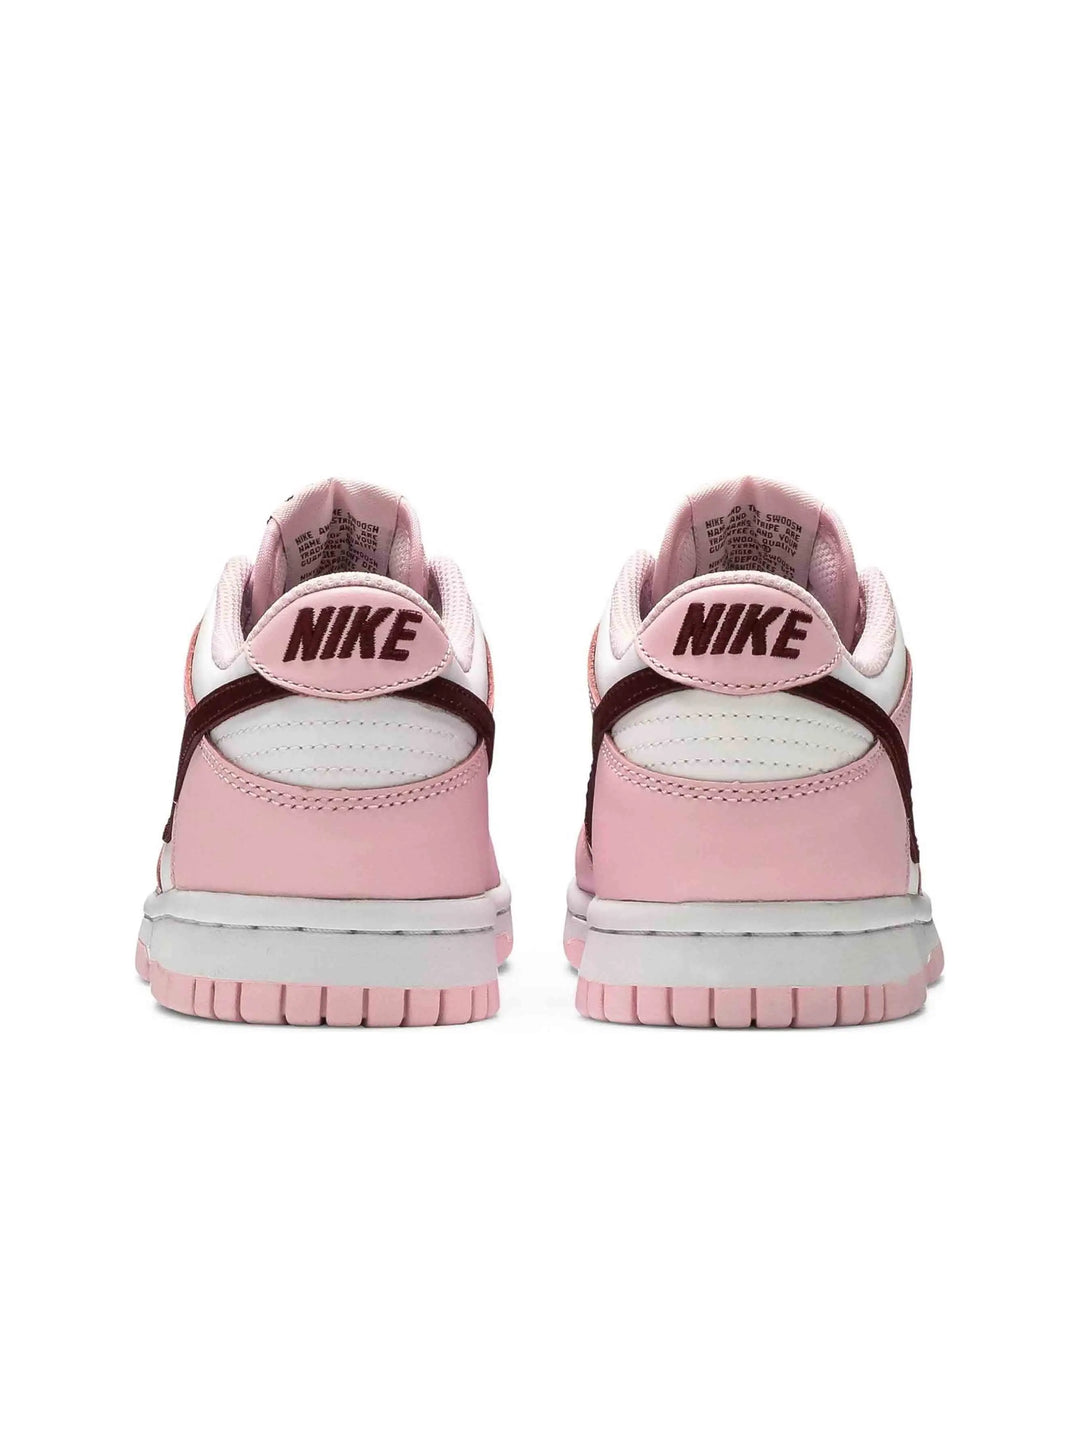 Nike Dunk Low Pink Foam (2021) Prior